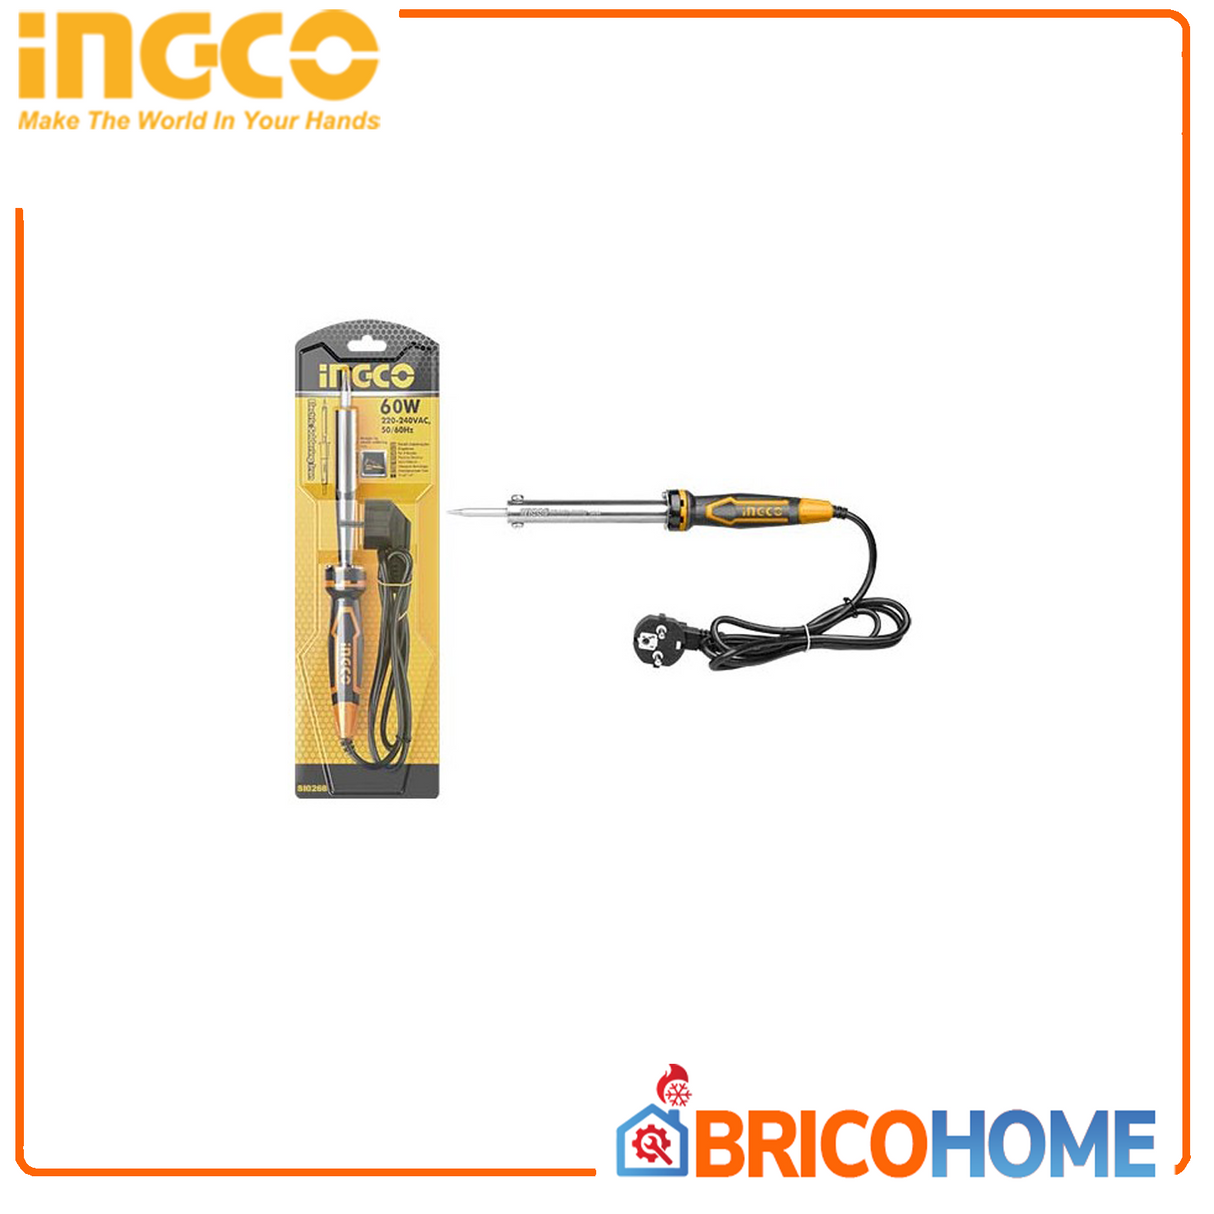 INGCO 40w electric soldering iron 